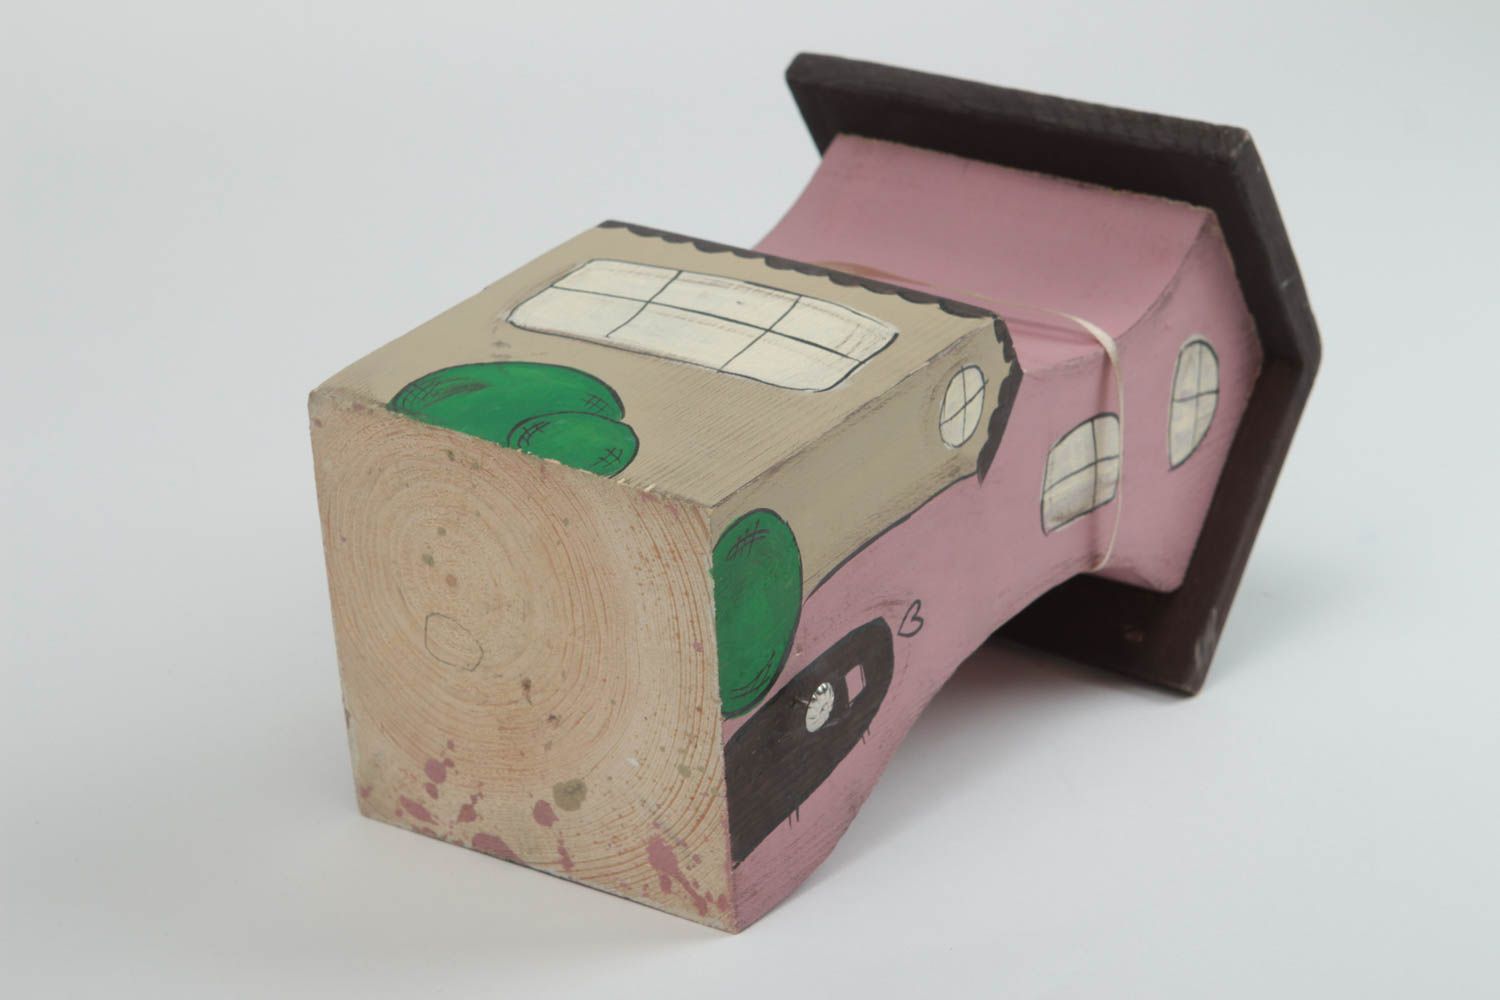 Handmade wood toy gift ideas for children nursery decor homemade home decor photo 4